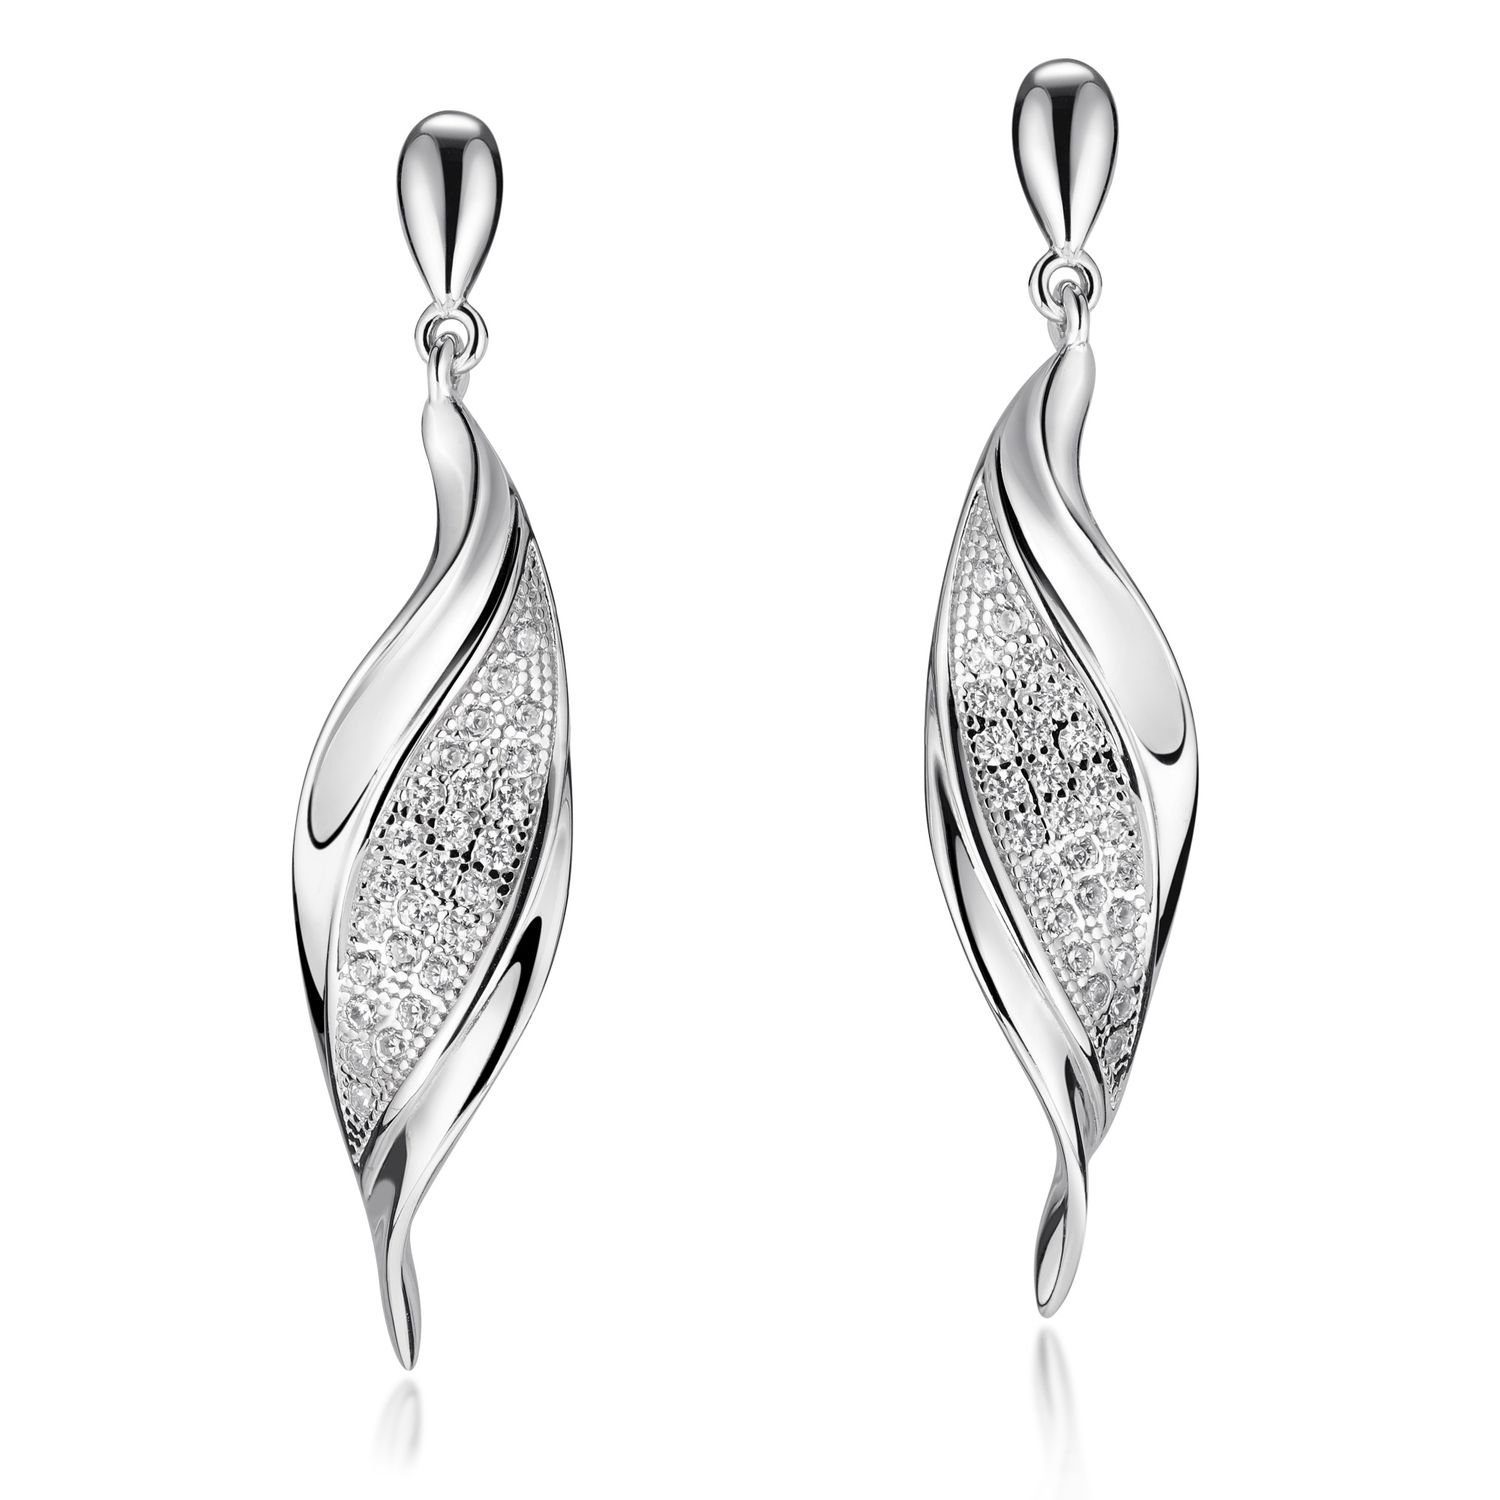 Materia Paar Ohrhänger Damen Silber Zirkonia Ohrringe gedreht SO-142, 925 Sterling Silber, rhodiniert